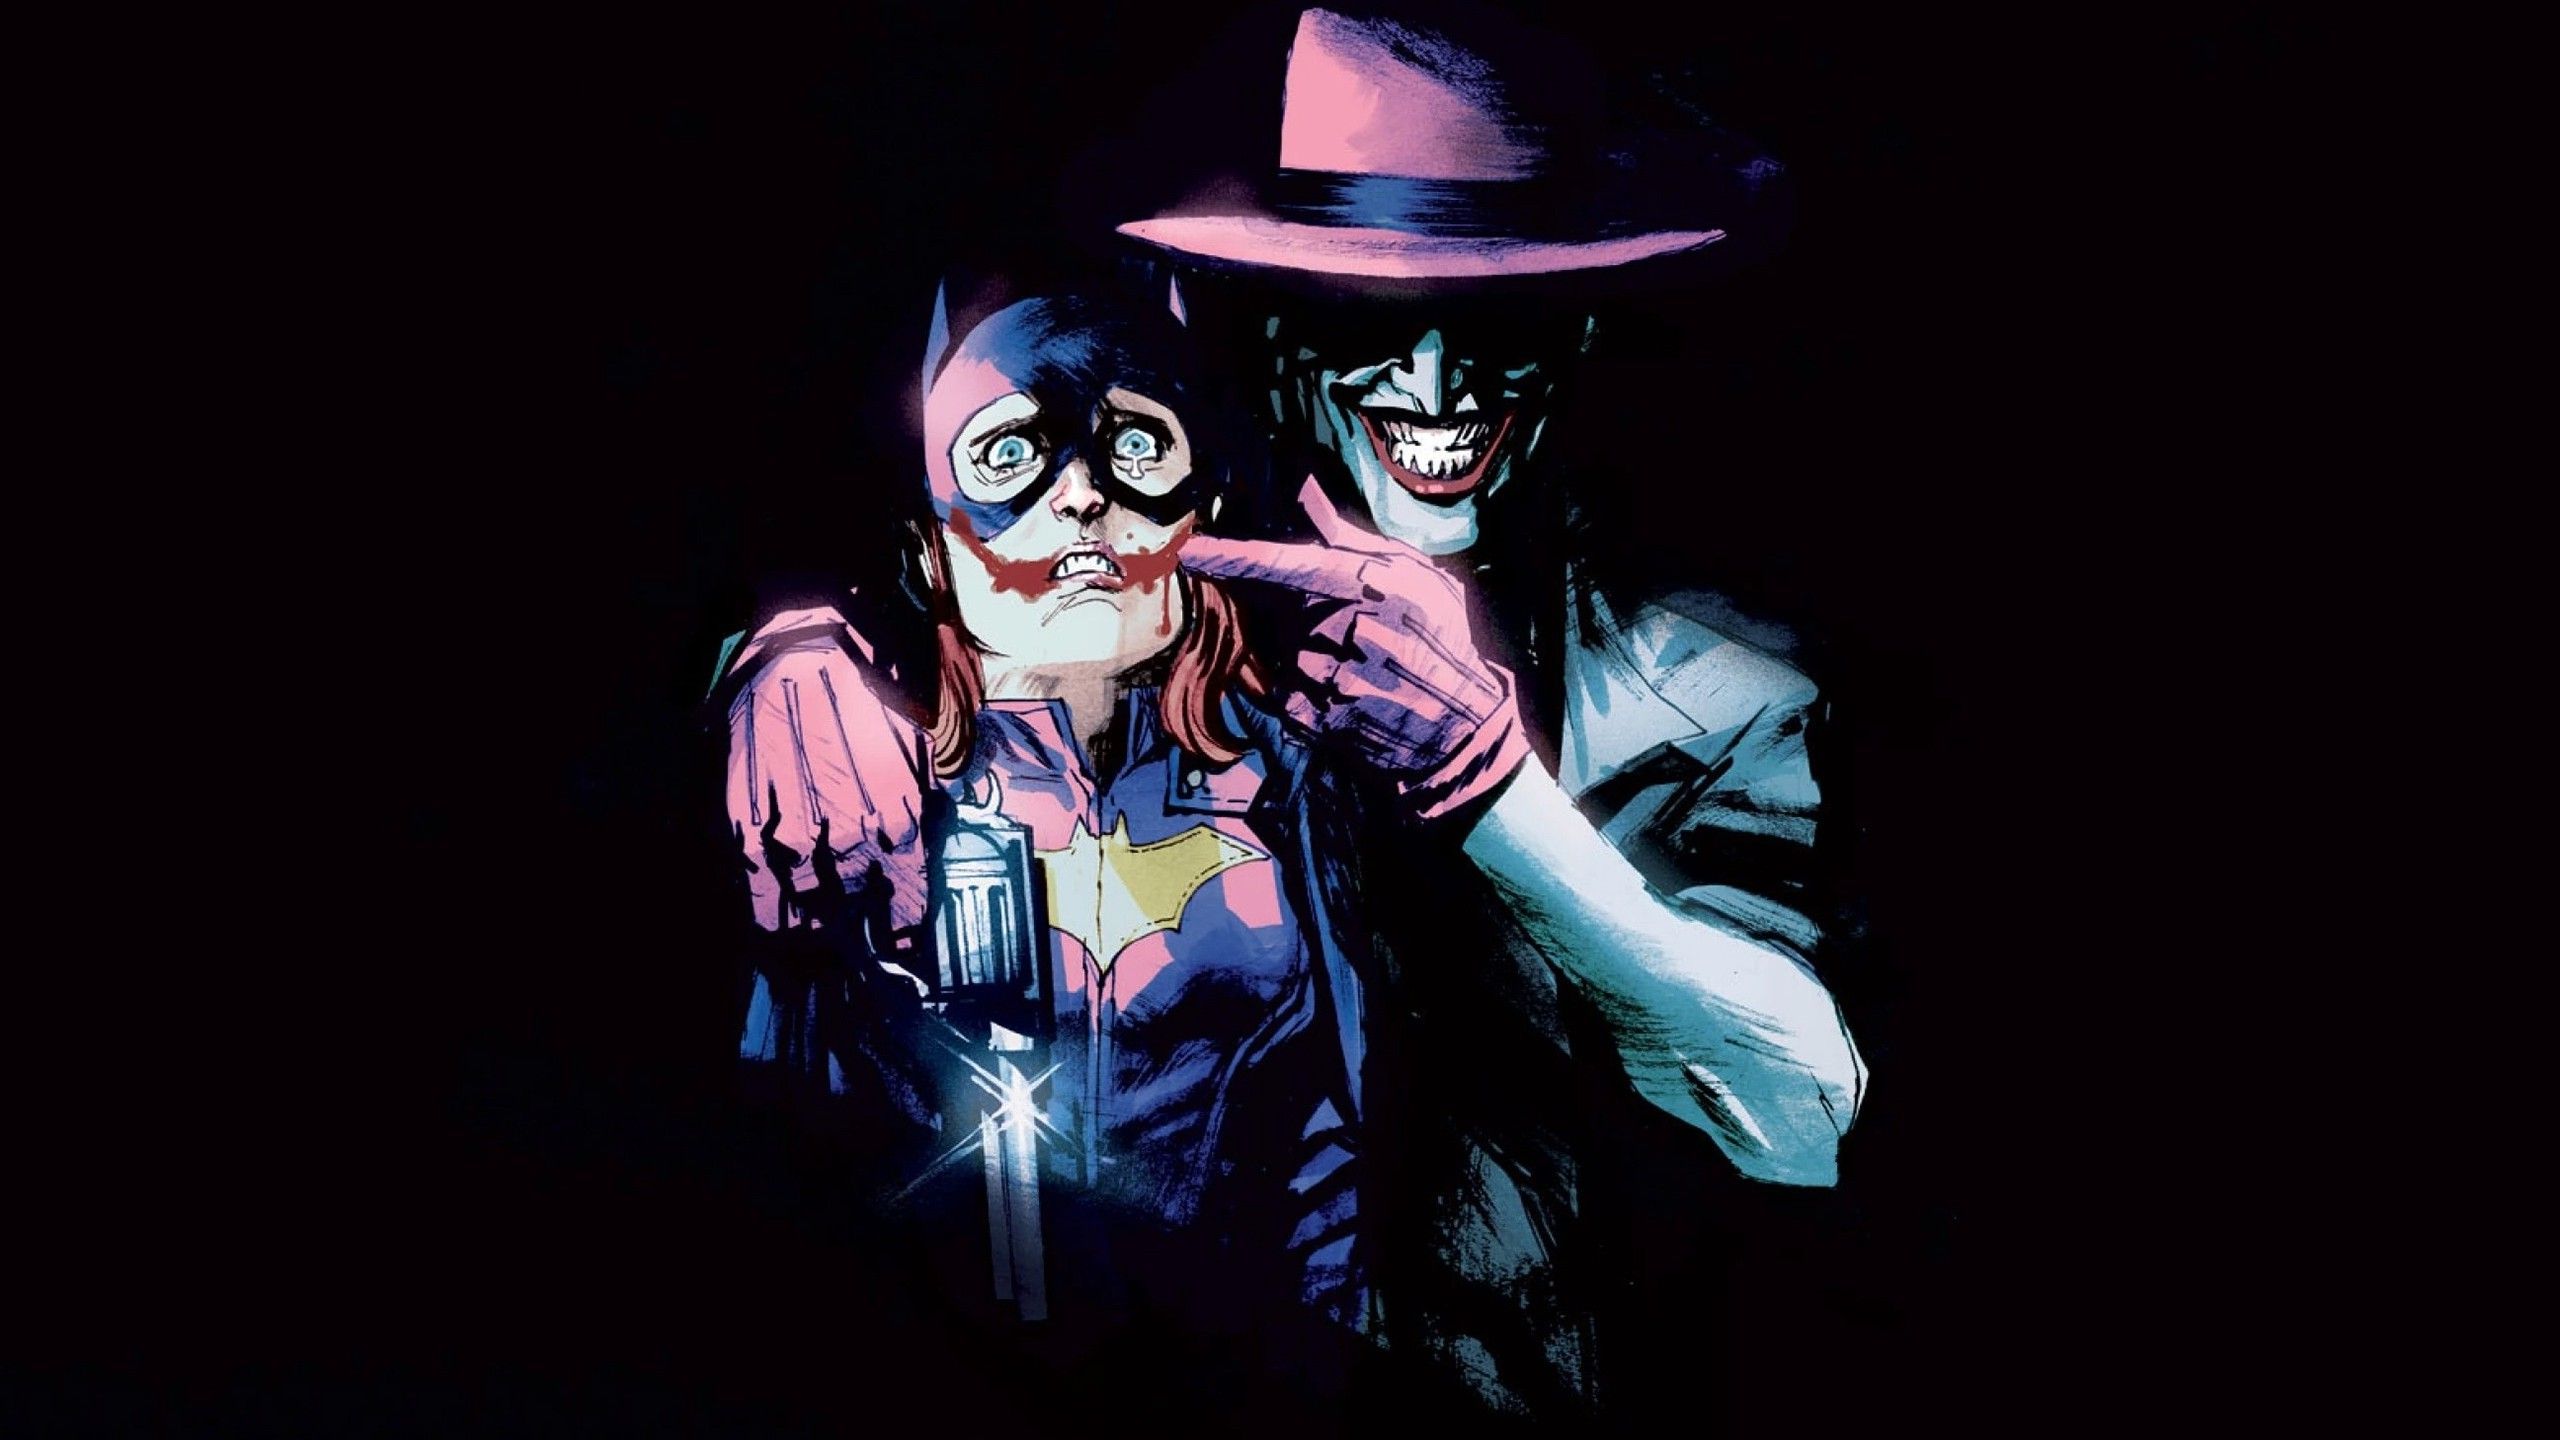 Mejor 59+ Joker fondo de pantalla en HipWallpaper | Batman Joker fondo de pantalla